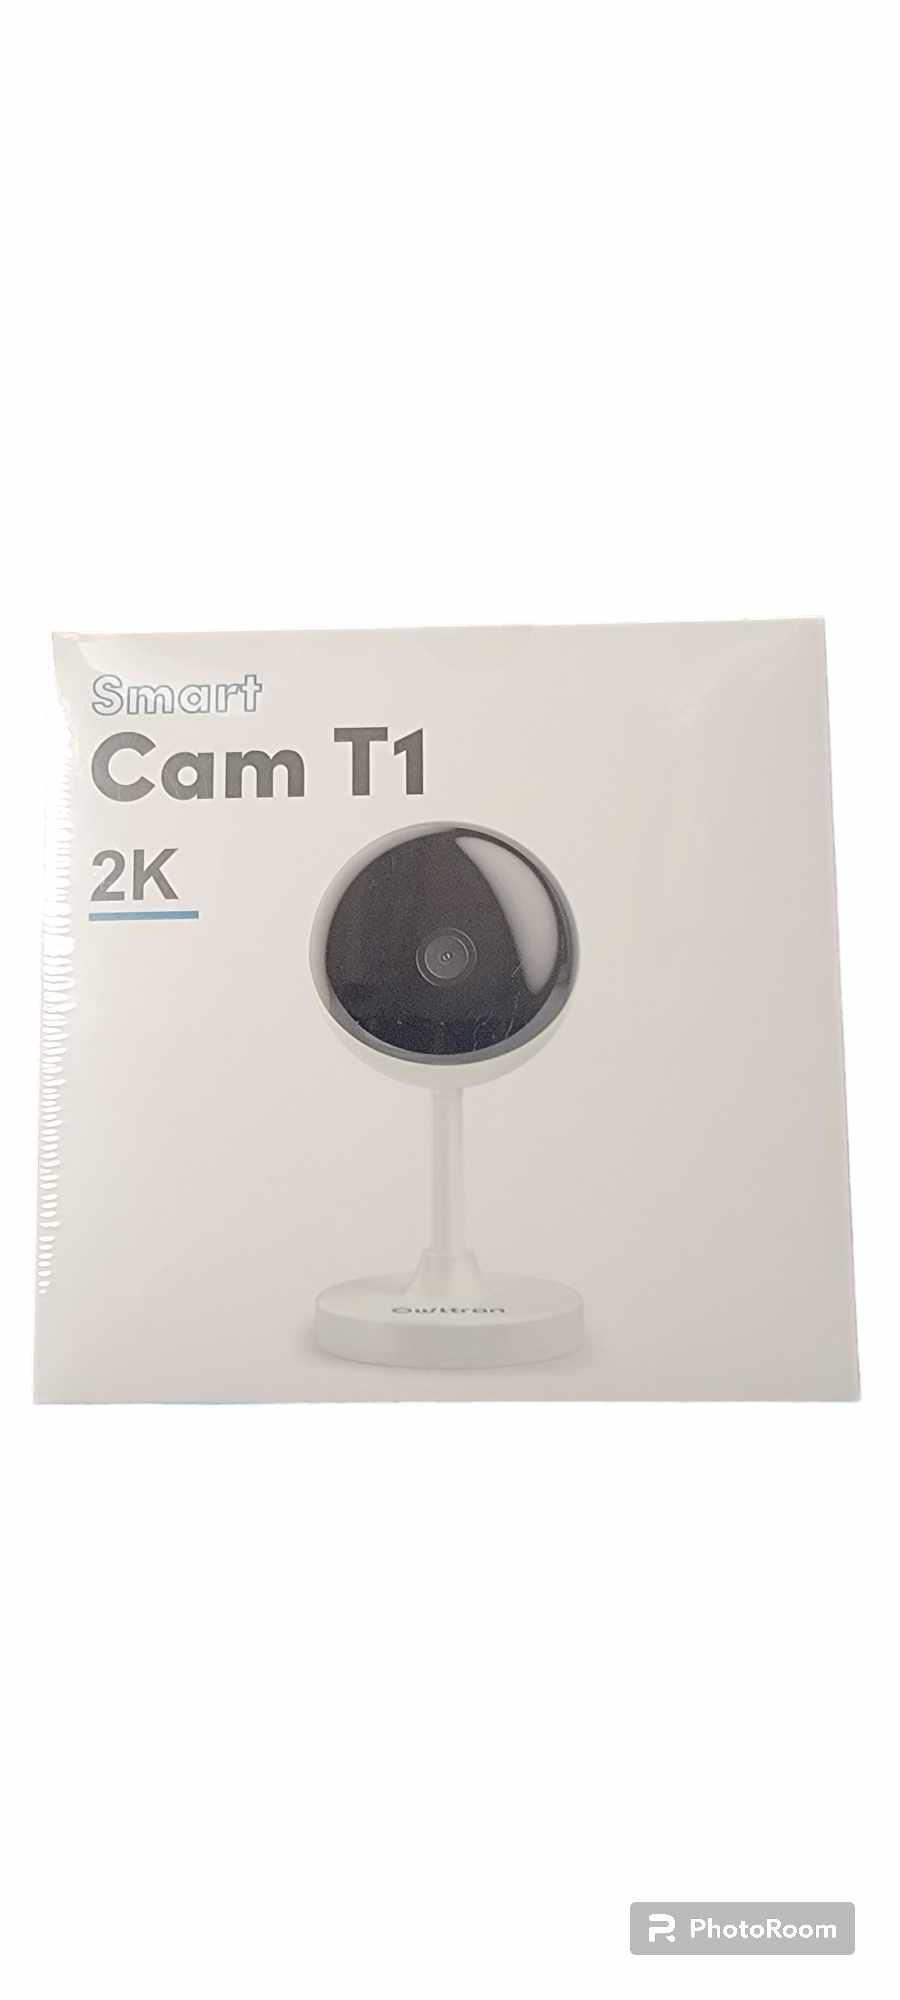 Smart Cam T1 2K LF-C3t